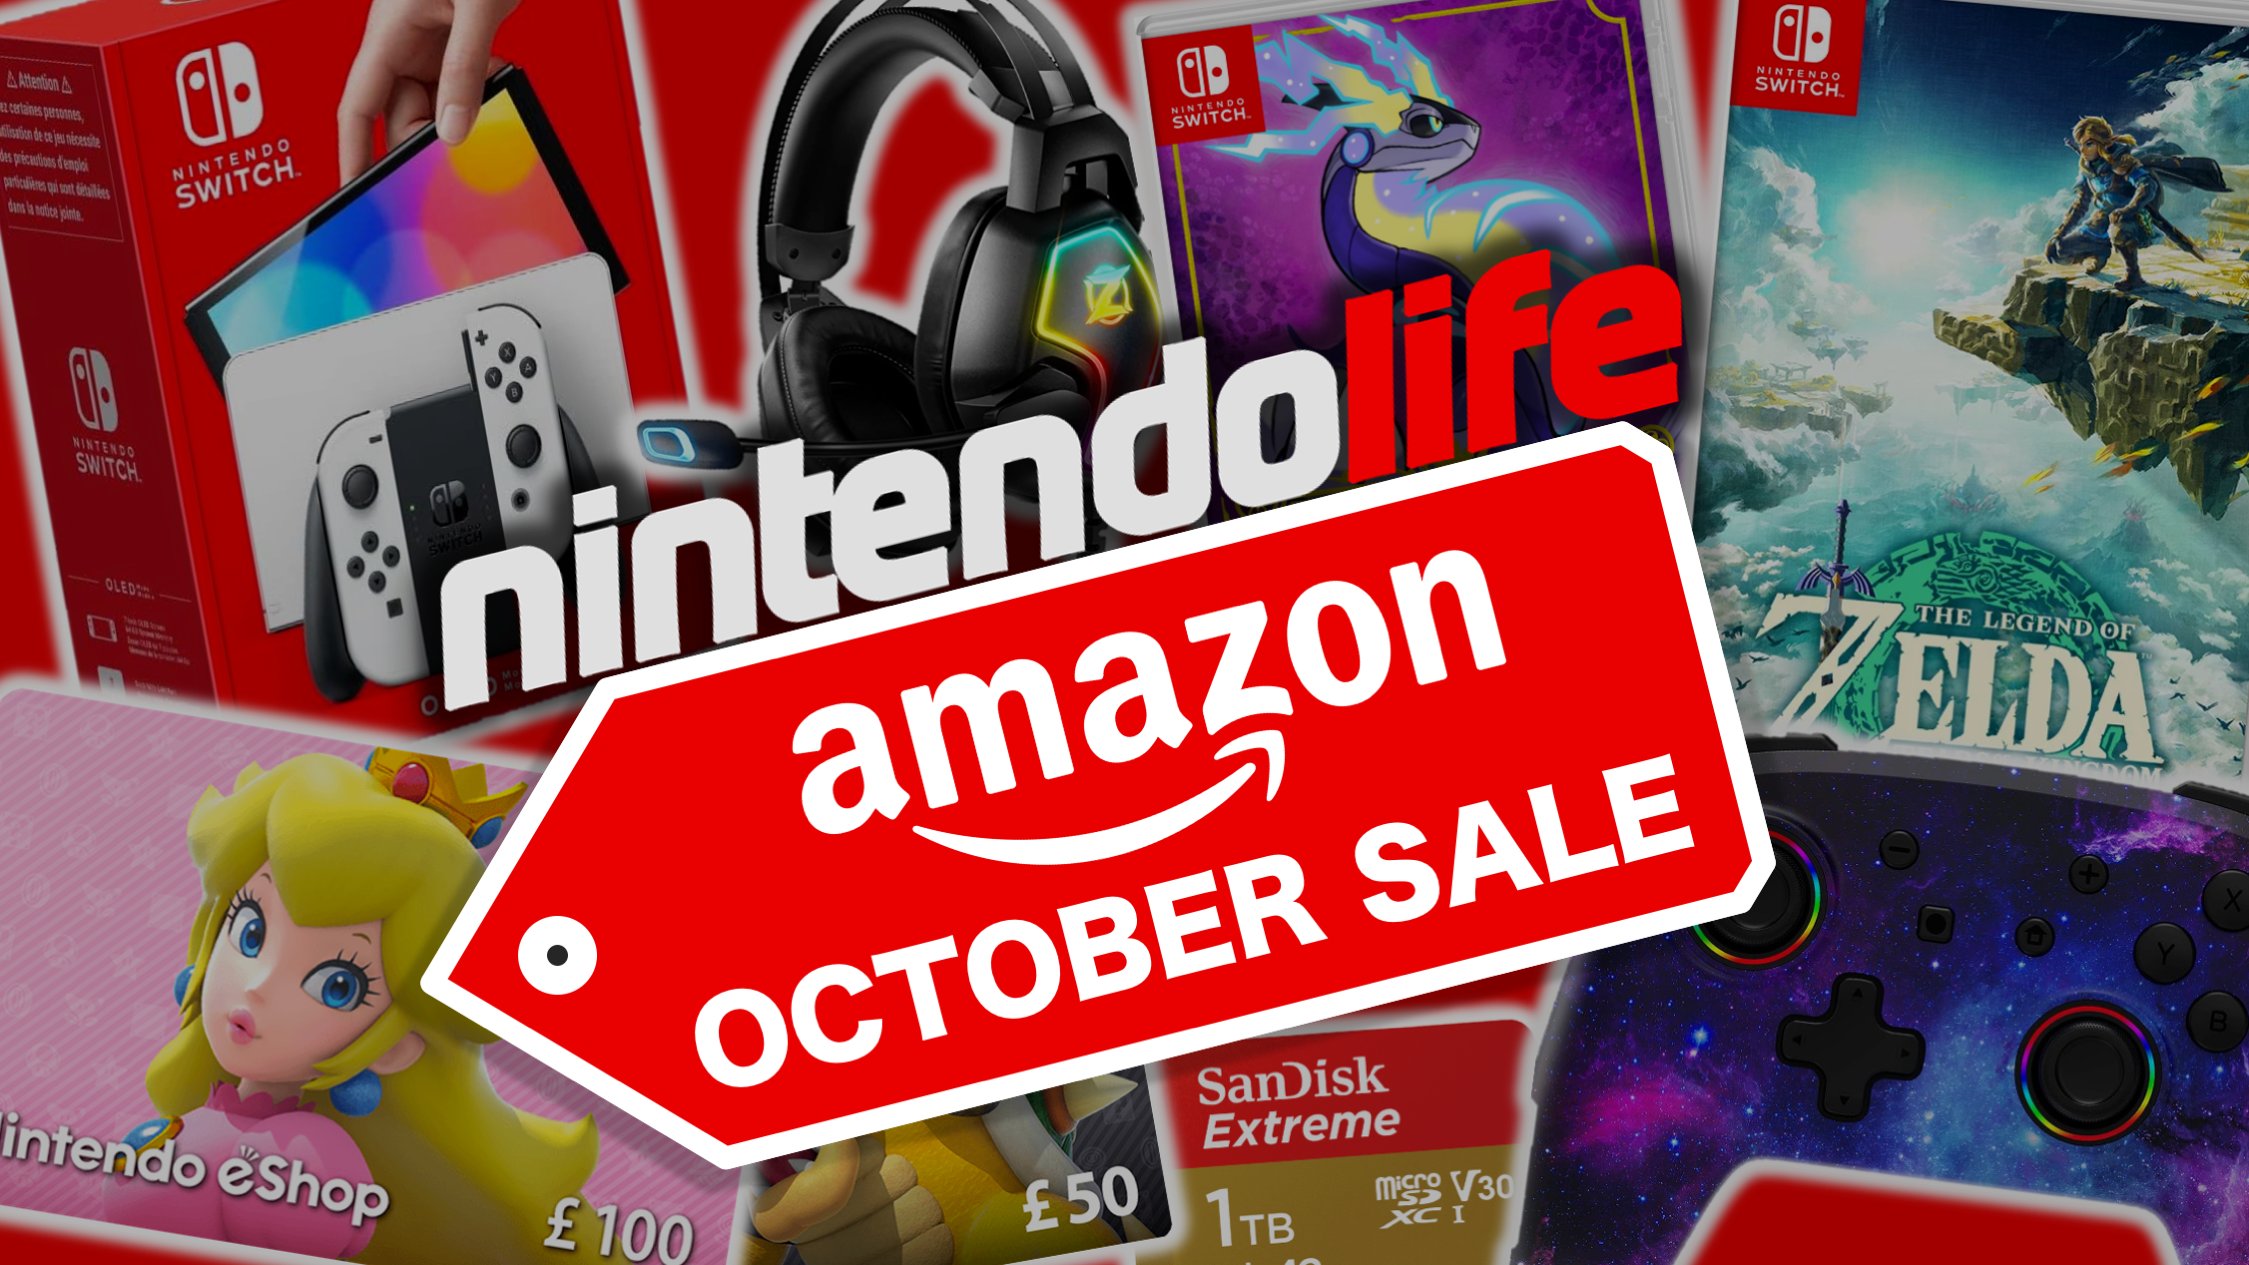 The best deals of the Nintendo eShop Black Friday Sale